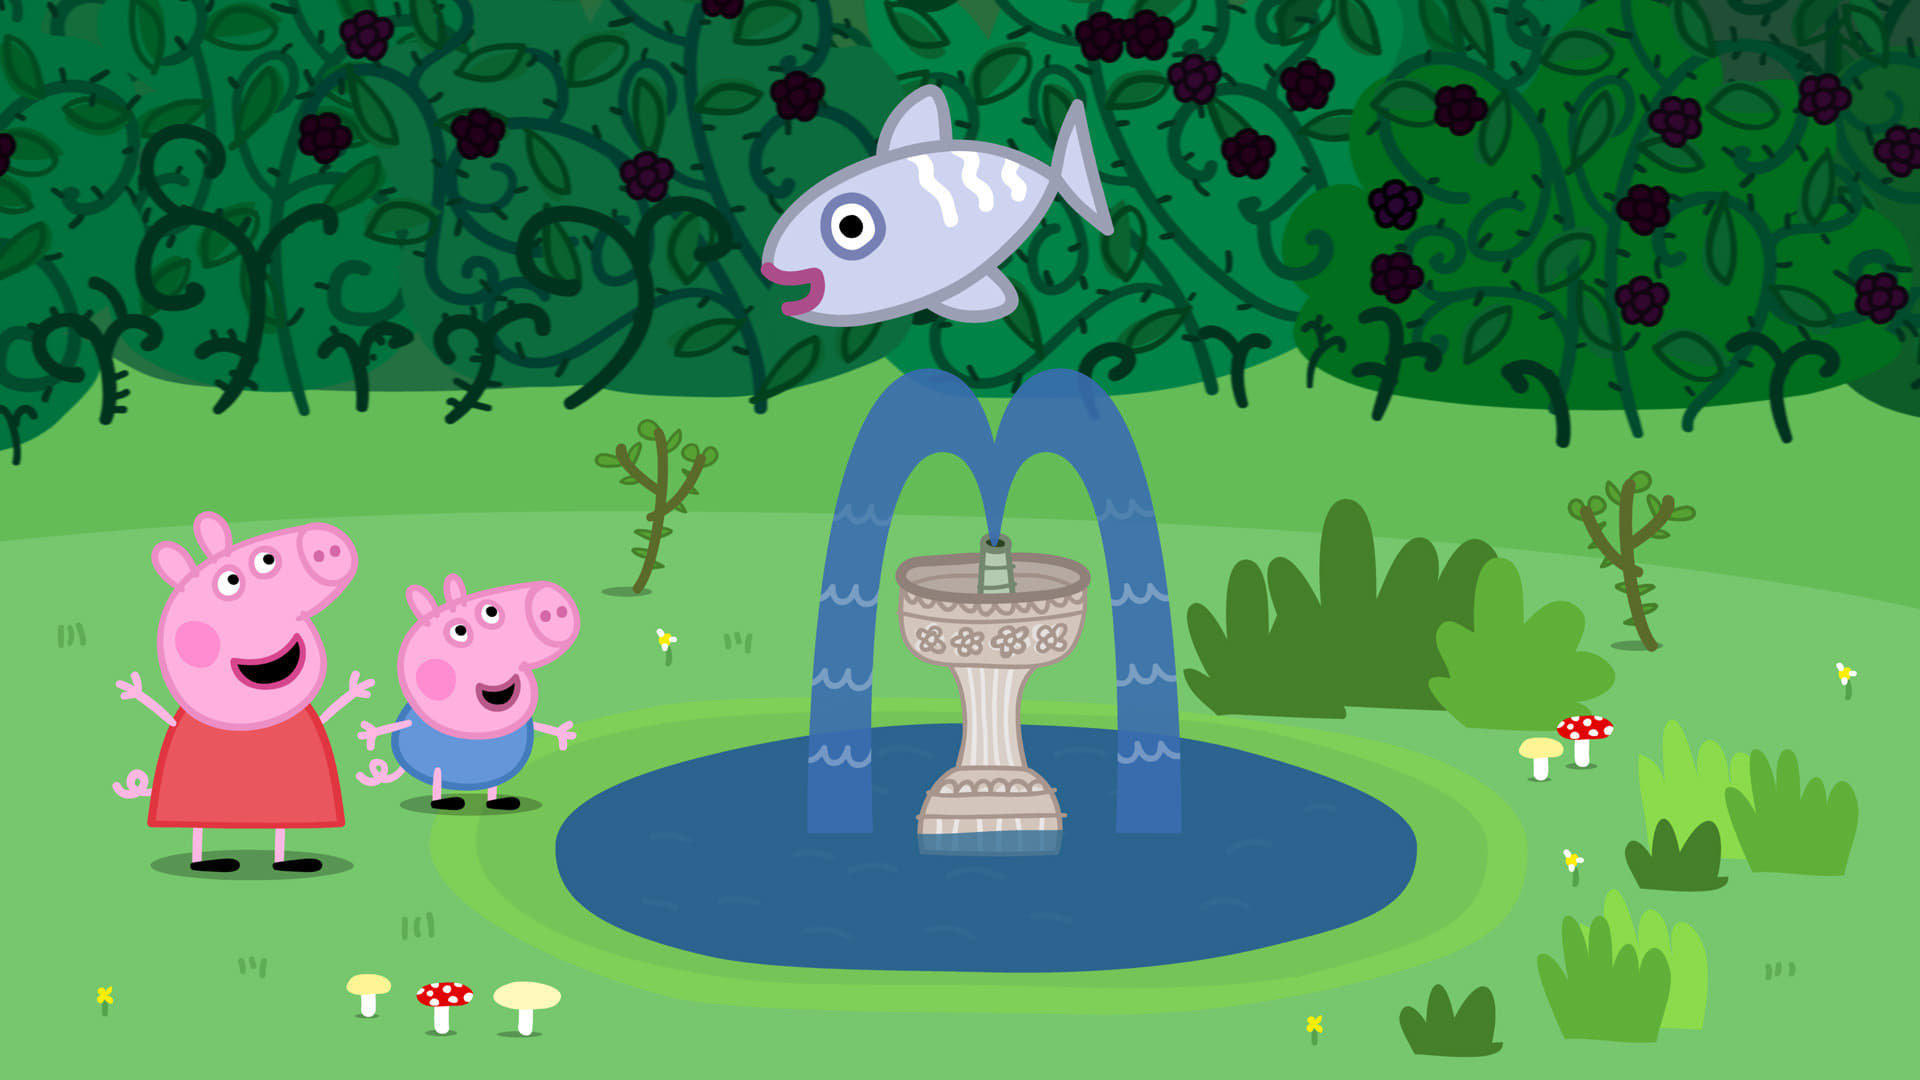 Peppa Pig Season 4 Episode 48, The Fish Pond